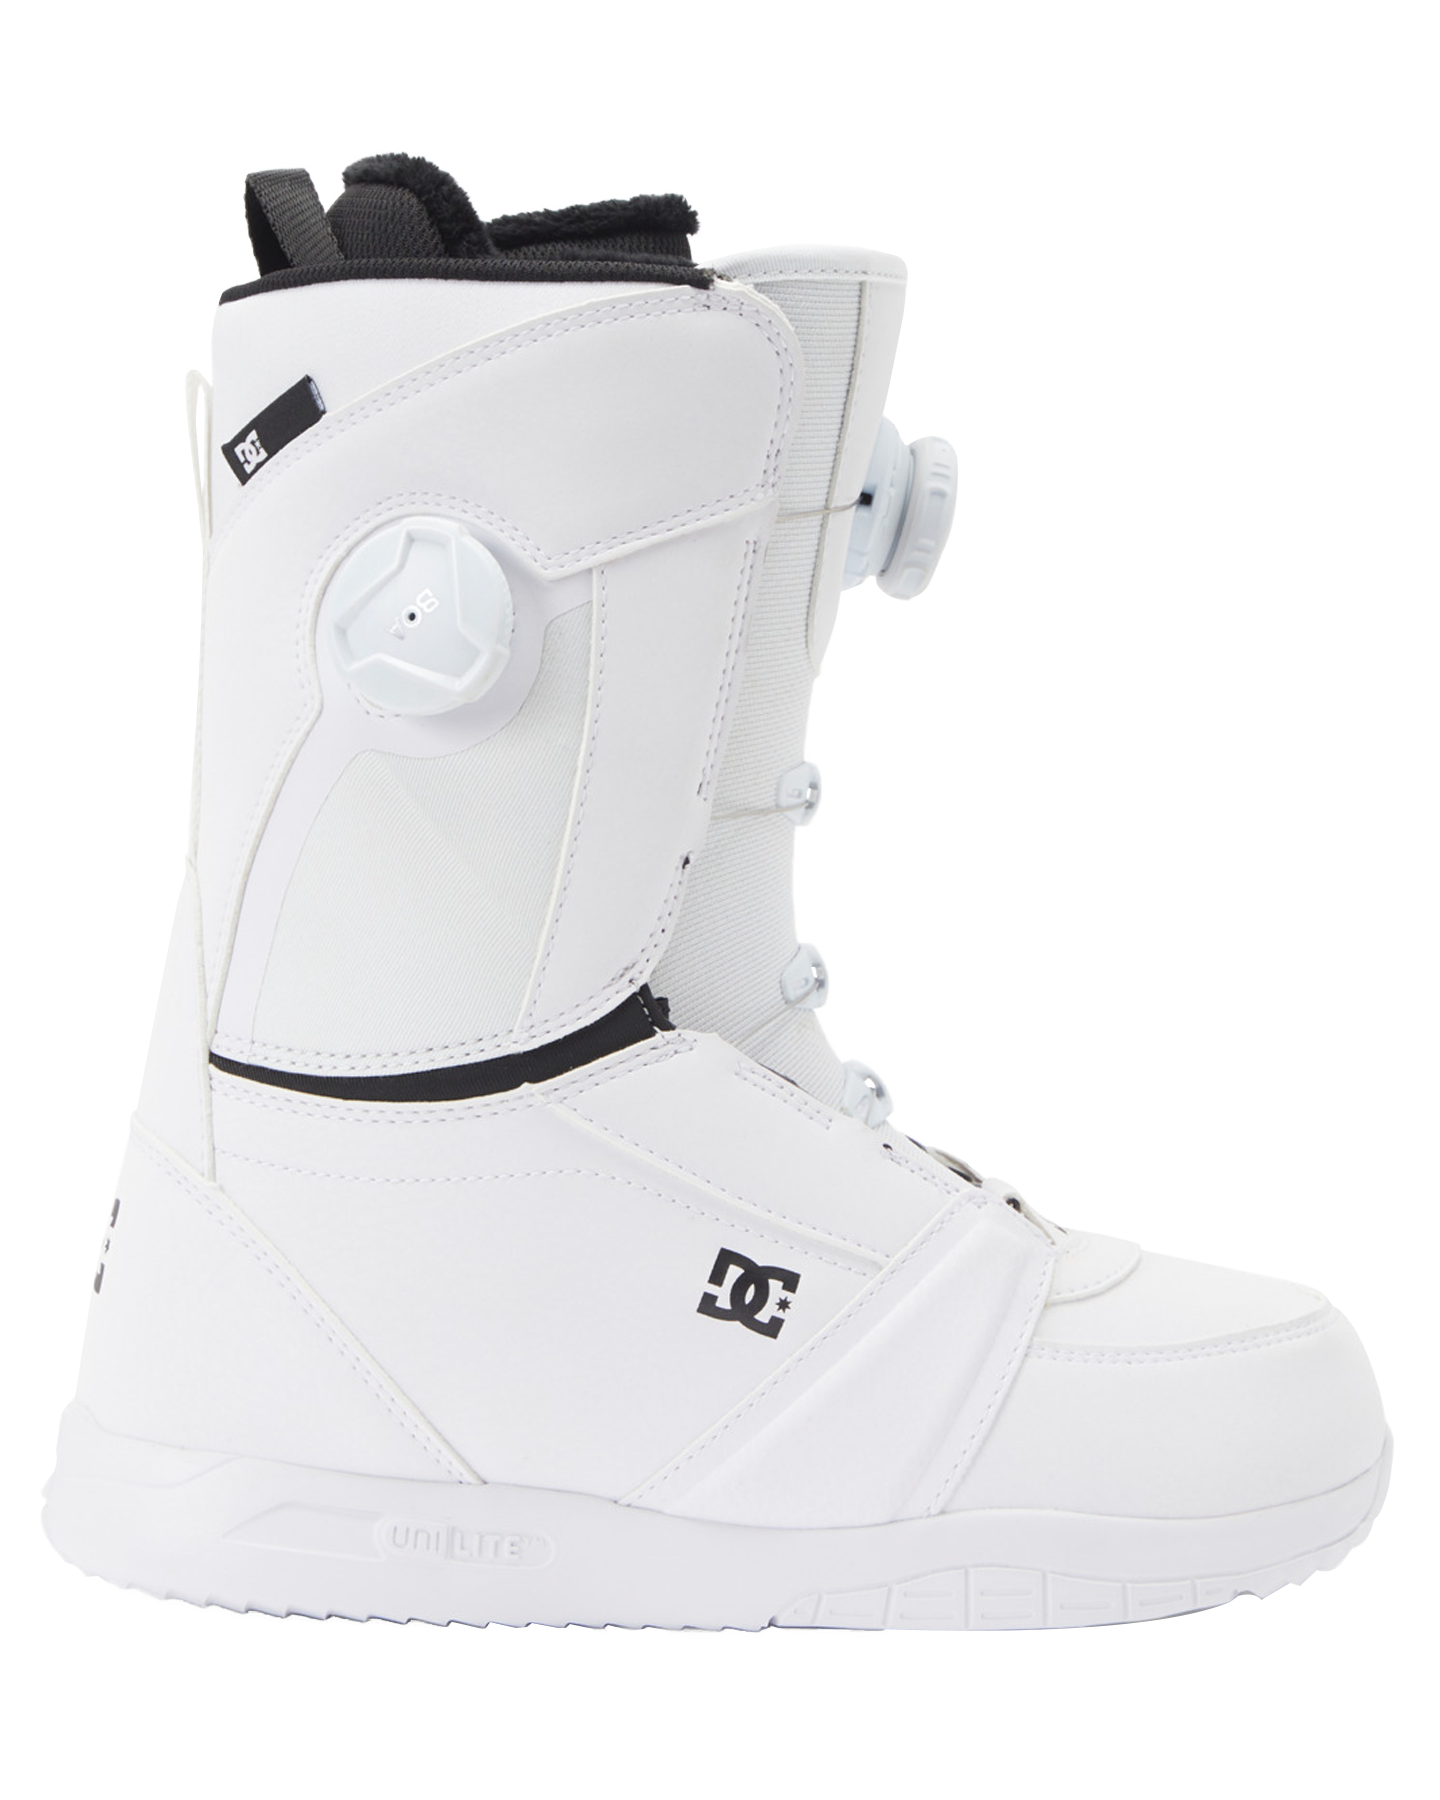 DC Women's Lotus Boa® Snowboard Boots - White/White Snowboard Boots - Womens - SnowSkiersWarehouse